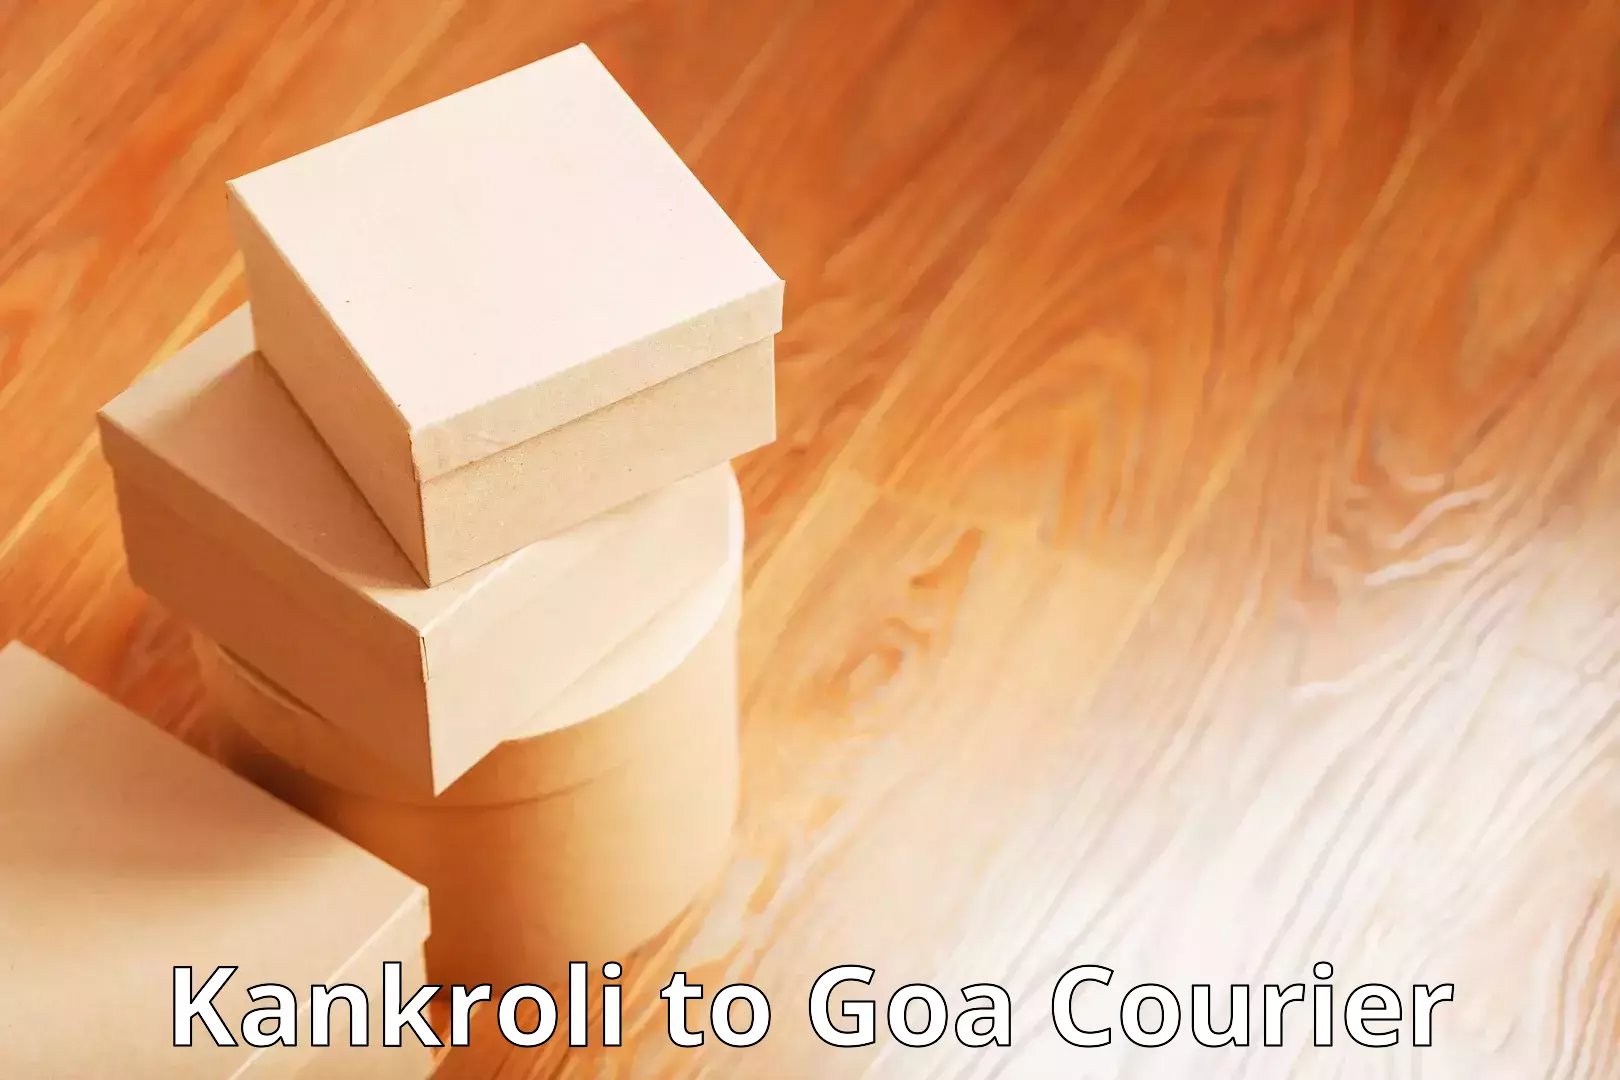 Enhanced tracking features Kankroli to Goa